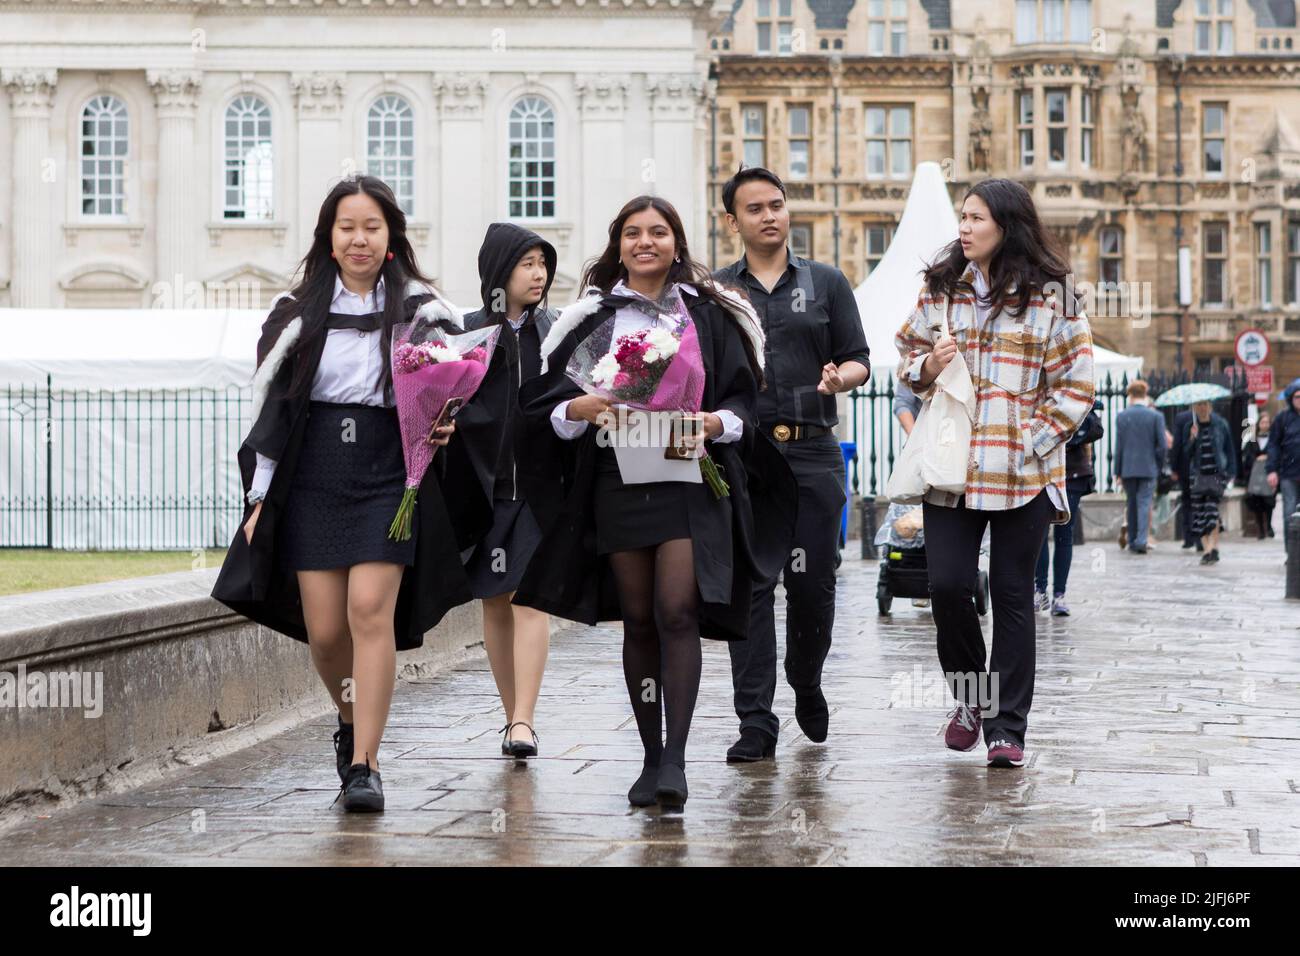 Cambridge graduates attend their graduation ceremony this morning at Senate House.   Image shot on 29th June 2022.  © Belinda Jiao   jiao.bilin@gmail. Stock Photo